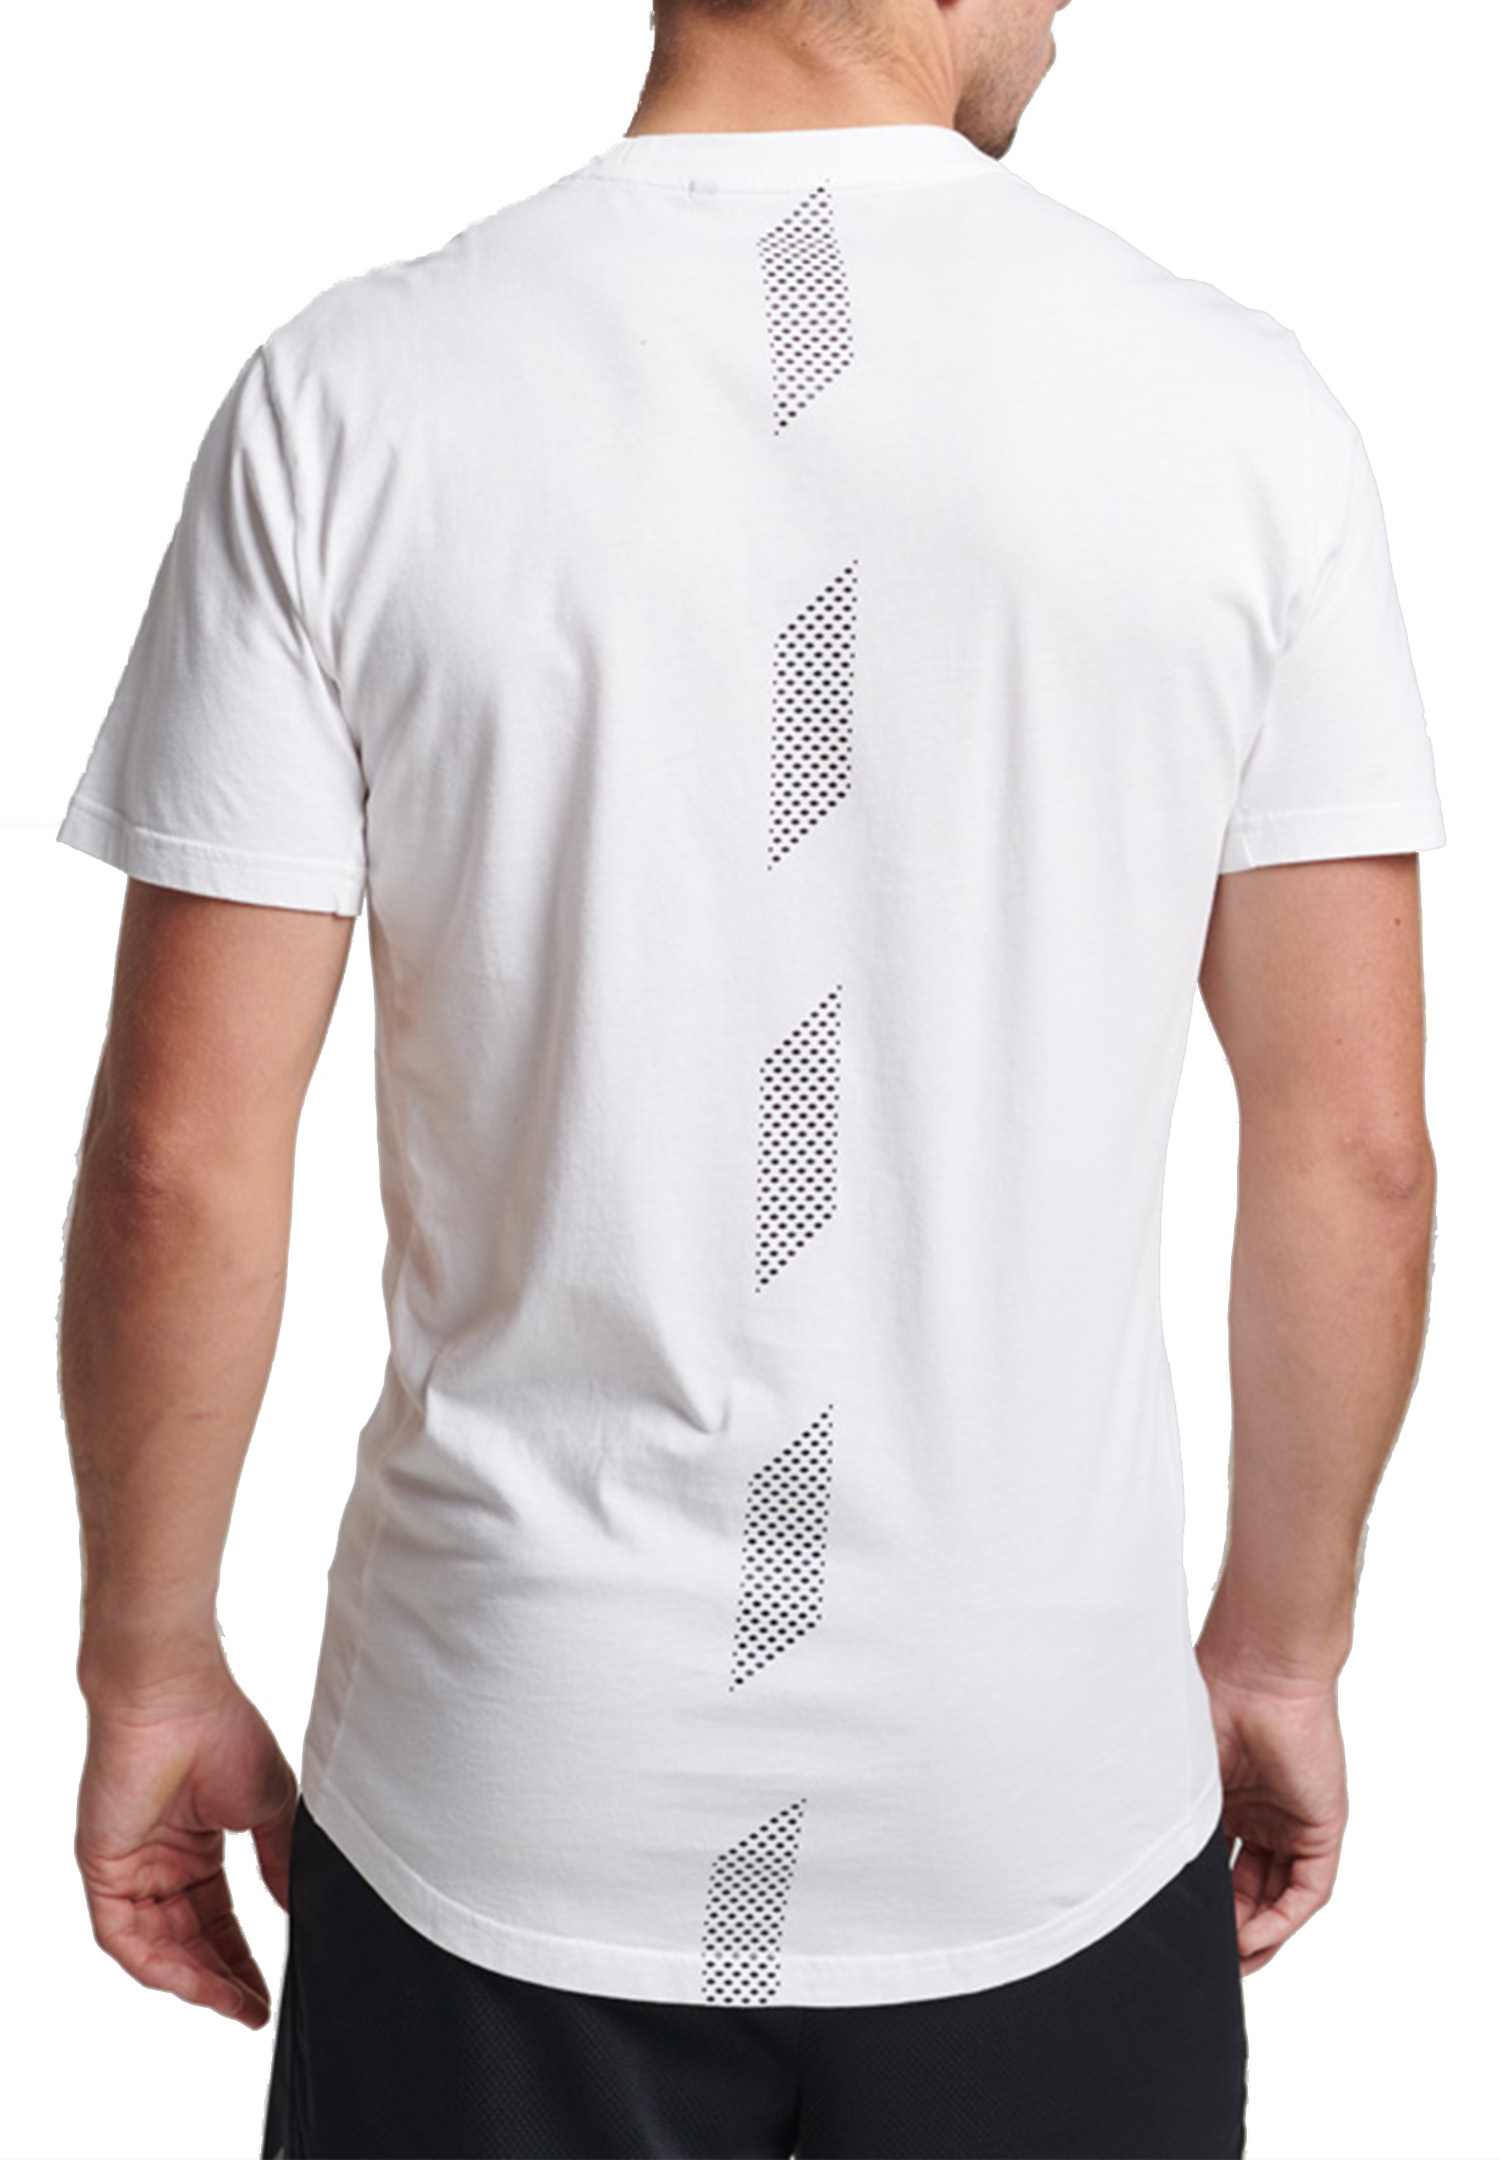 Superdry Core Loose Sort Sleeve Tee T-Shirt Herren Shirt MS311304A weiß